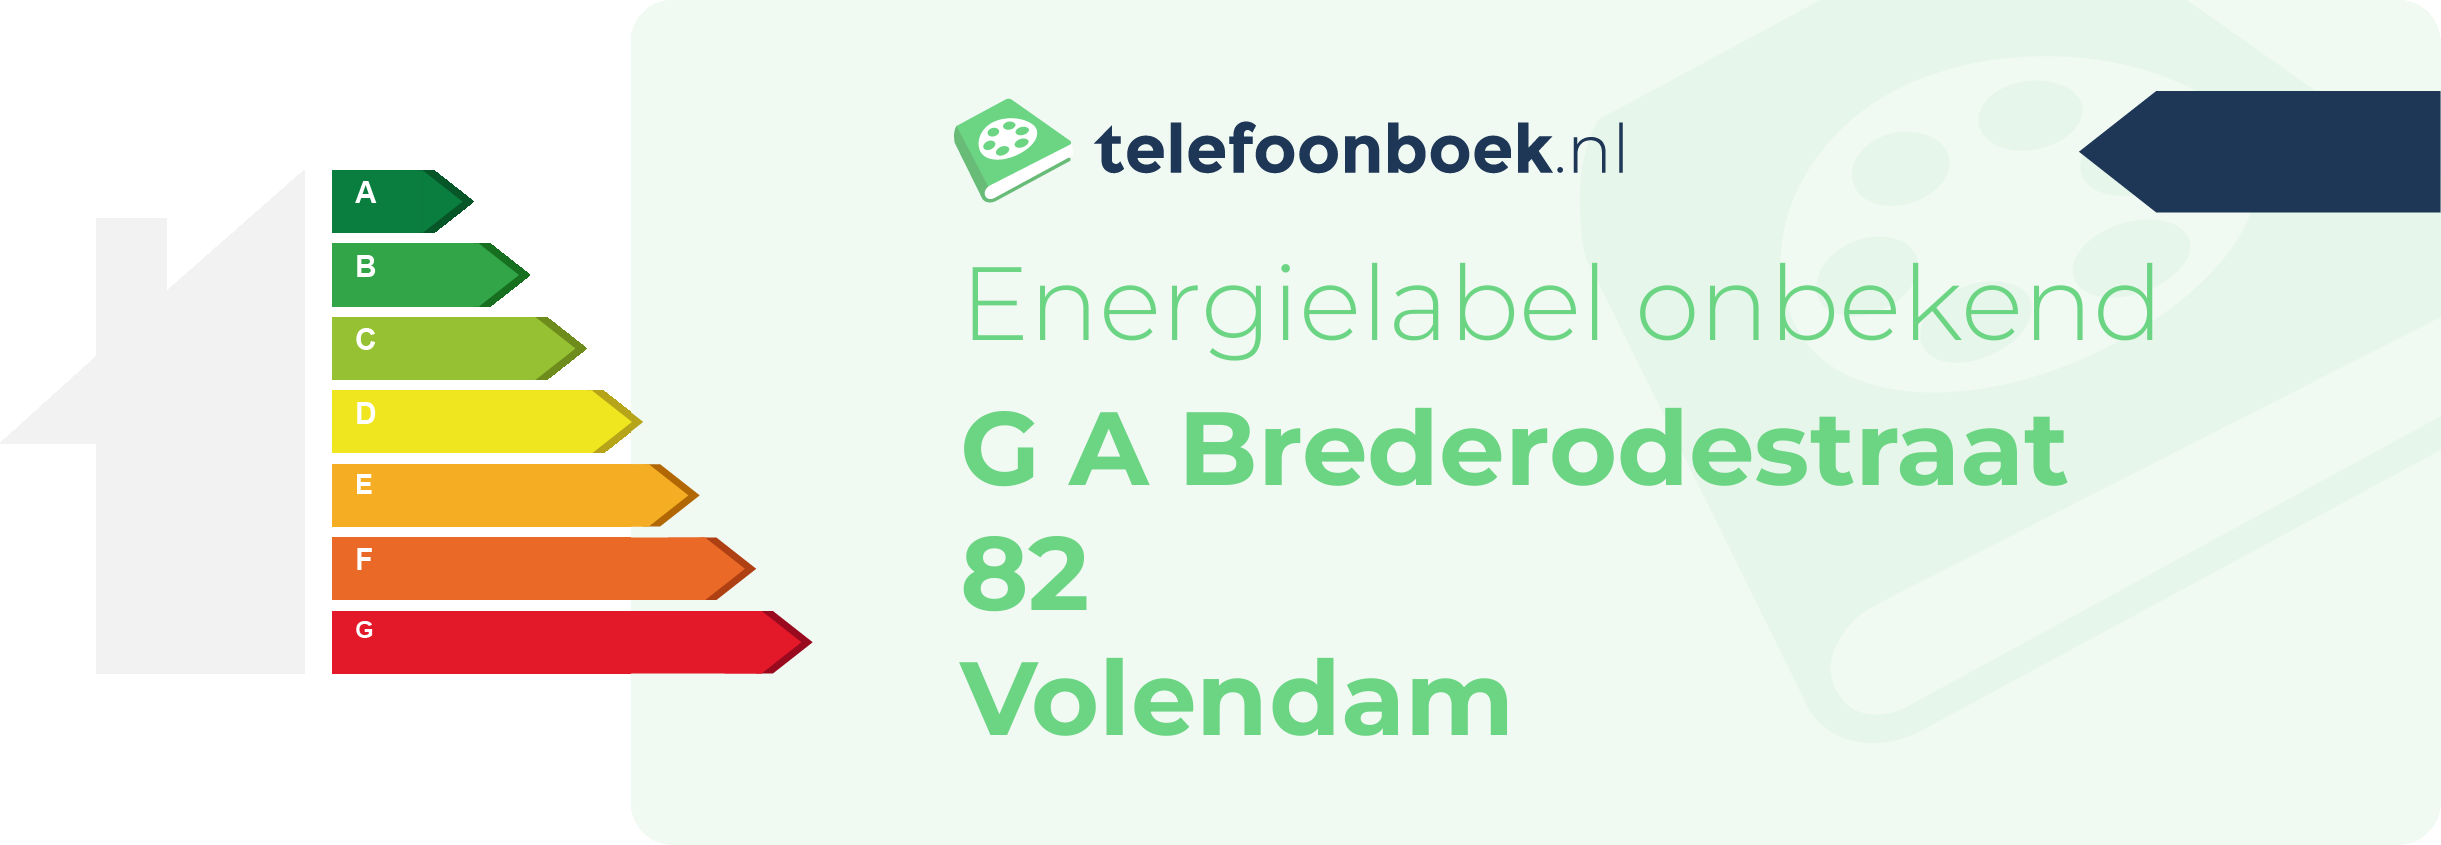 Energielabel G A Brederodestraat 82 Volendam